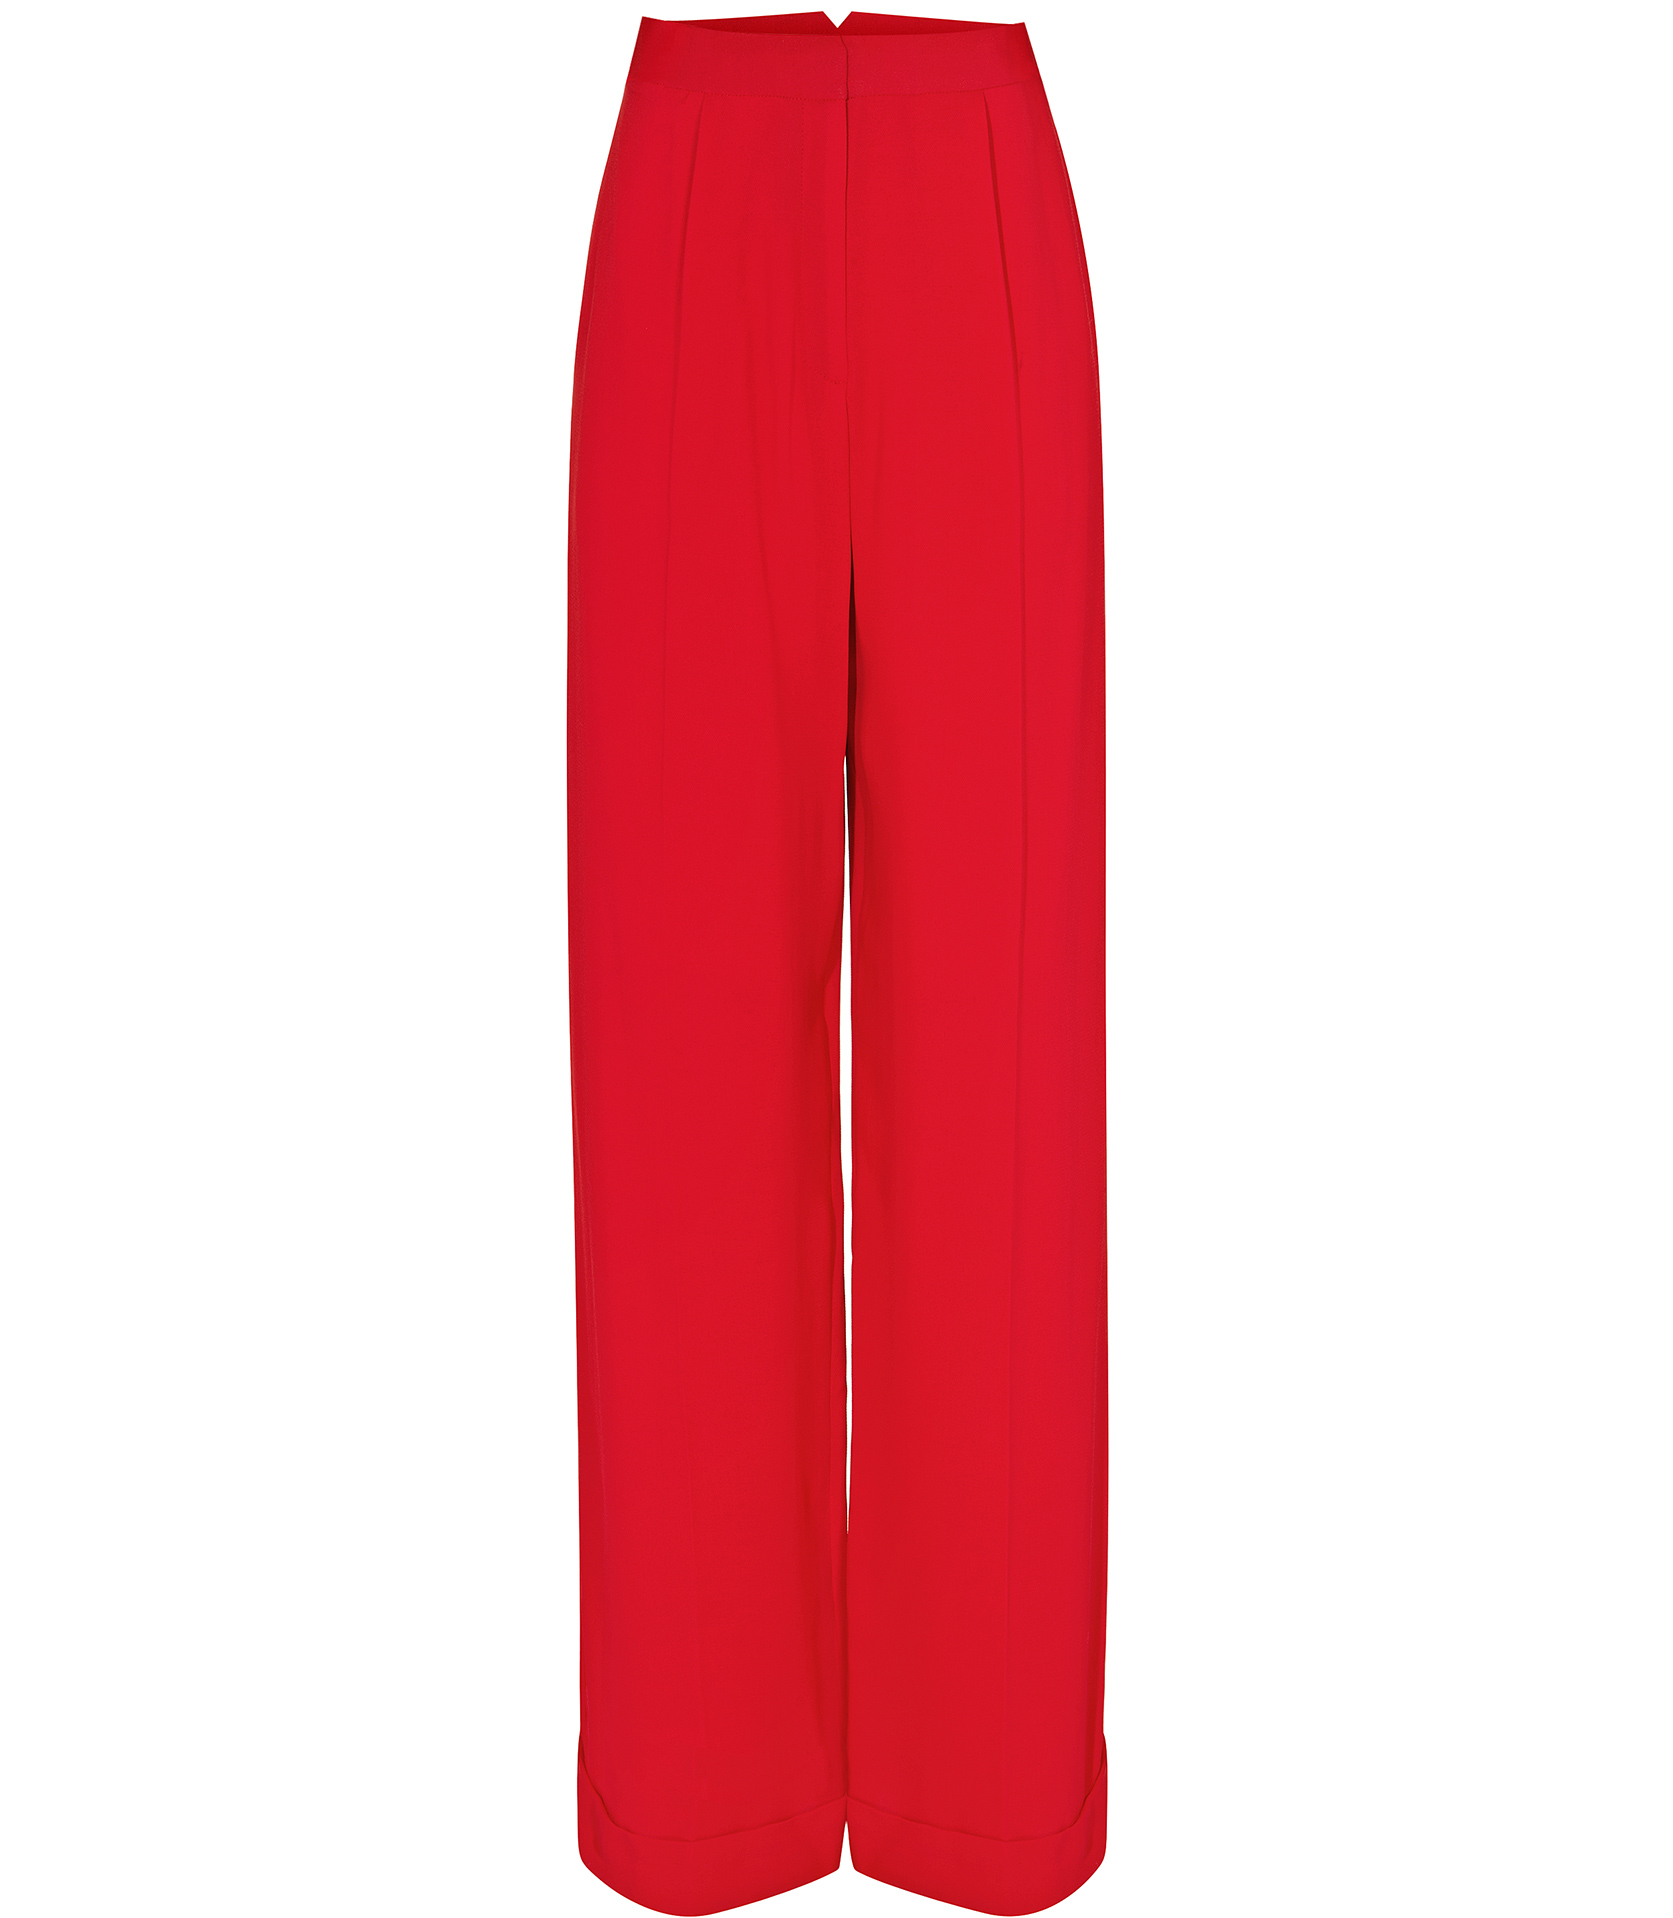 Lyst - Reiss Daria Wide Leg Trousers in Red